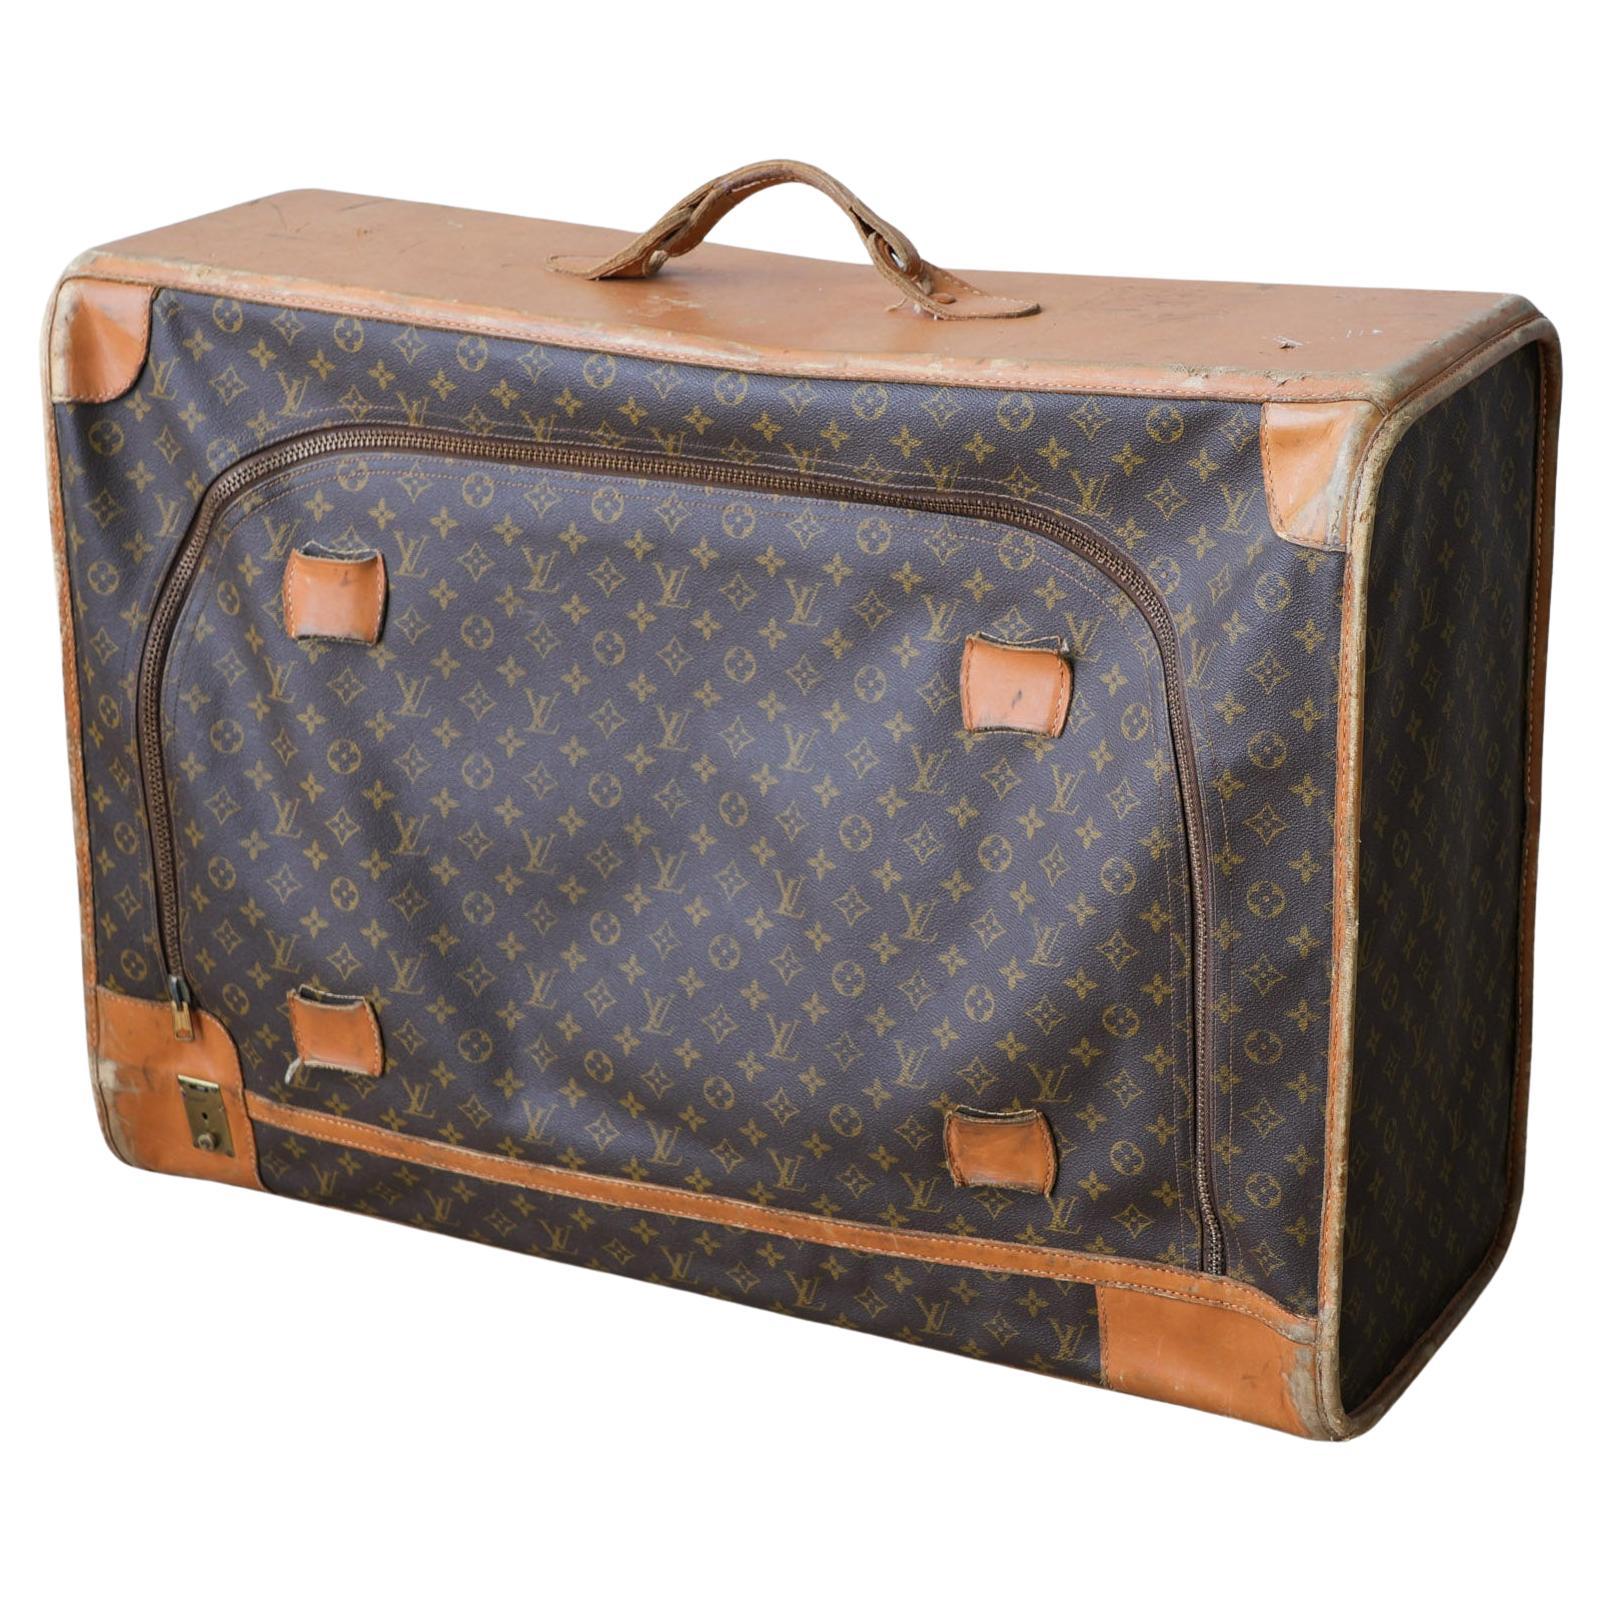 Original vintage Louis Vuitton suitcase, from the 1970s